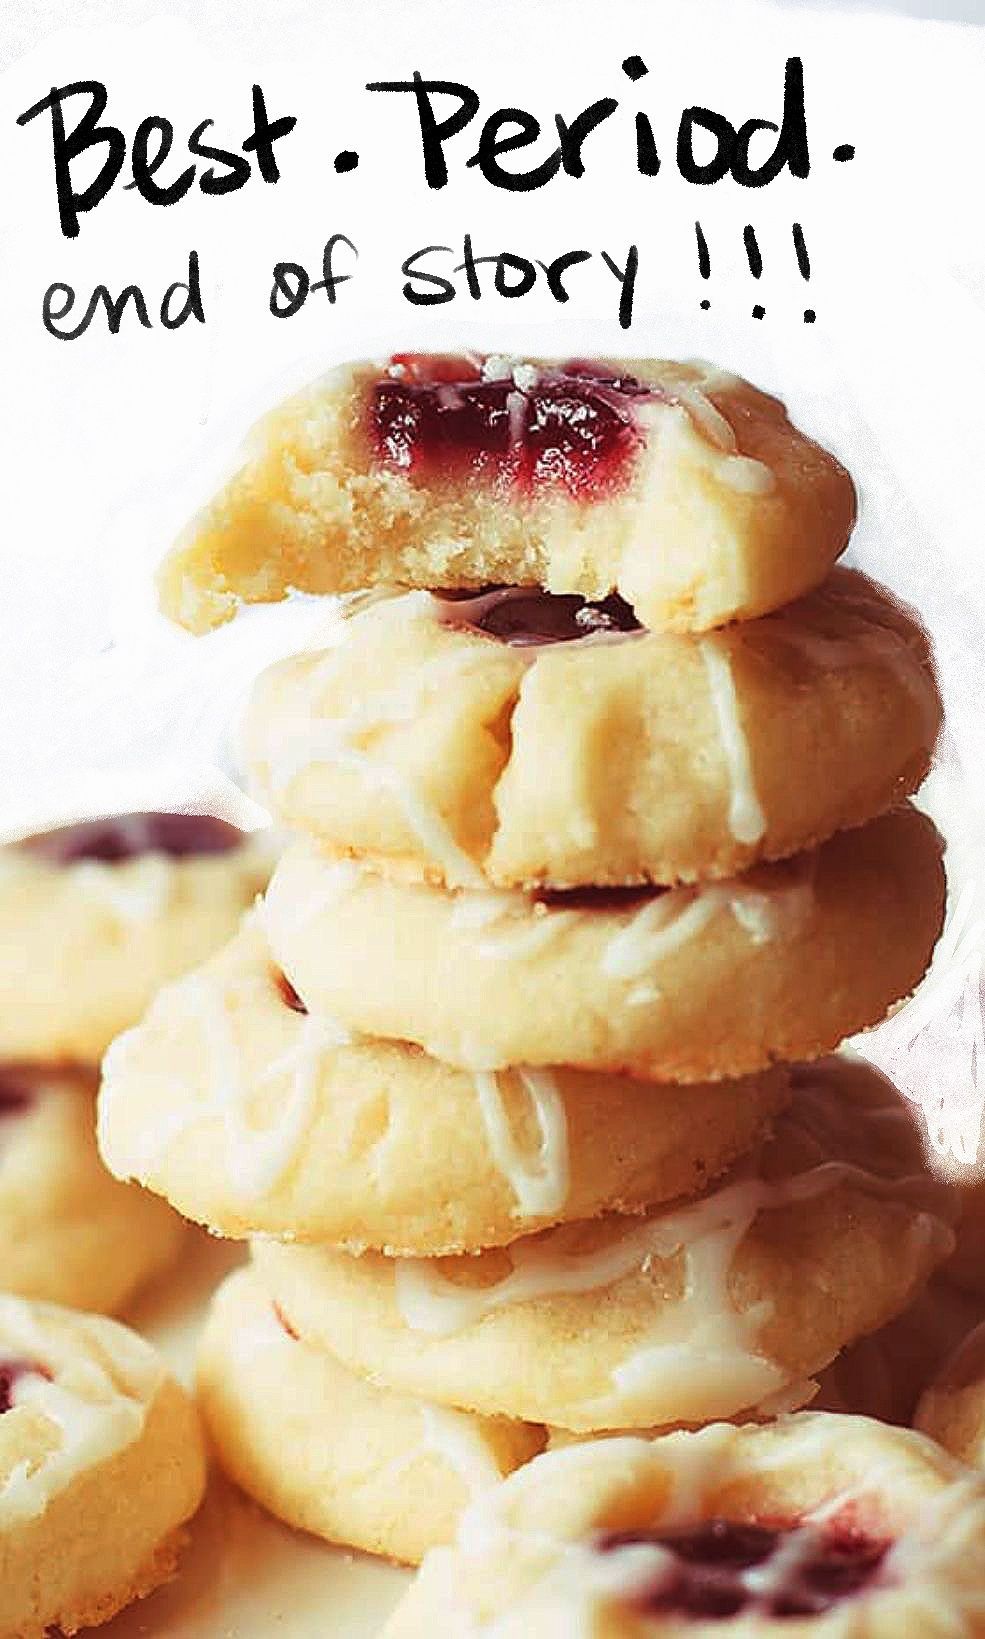 Raspberry Almond Shortbread Cookies -   19 best holiday Cookies ideas